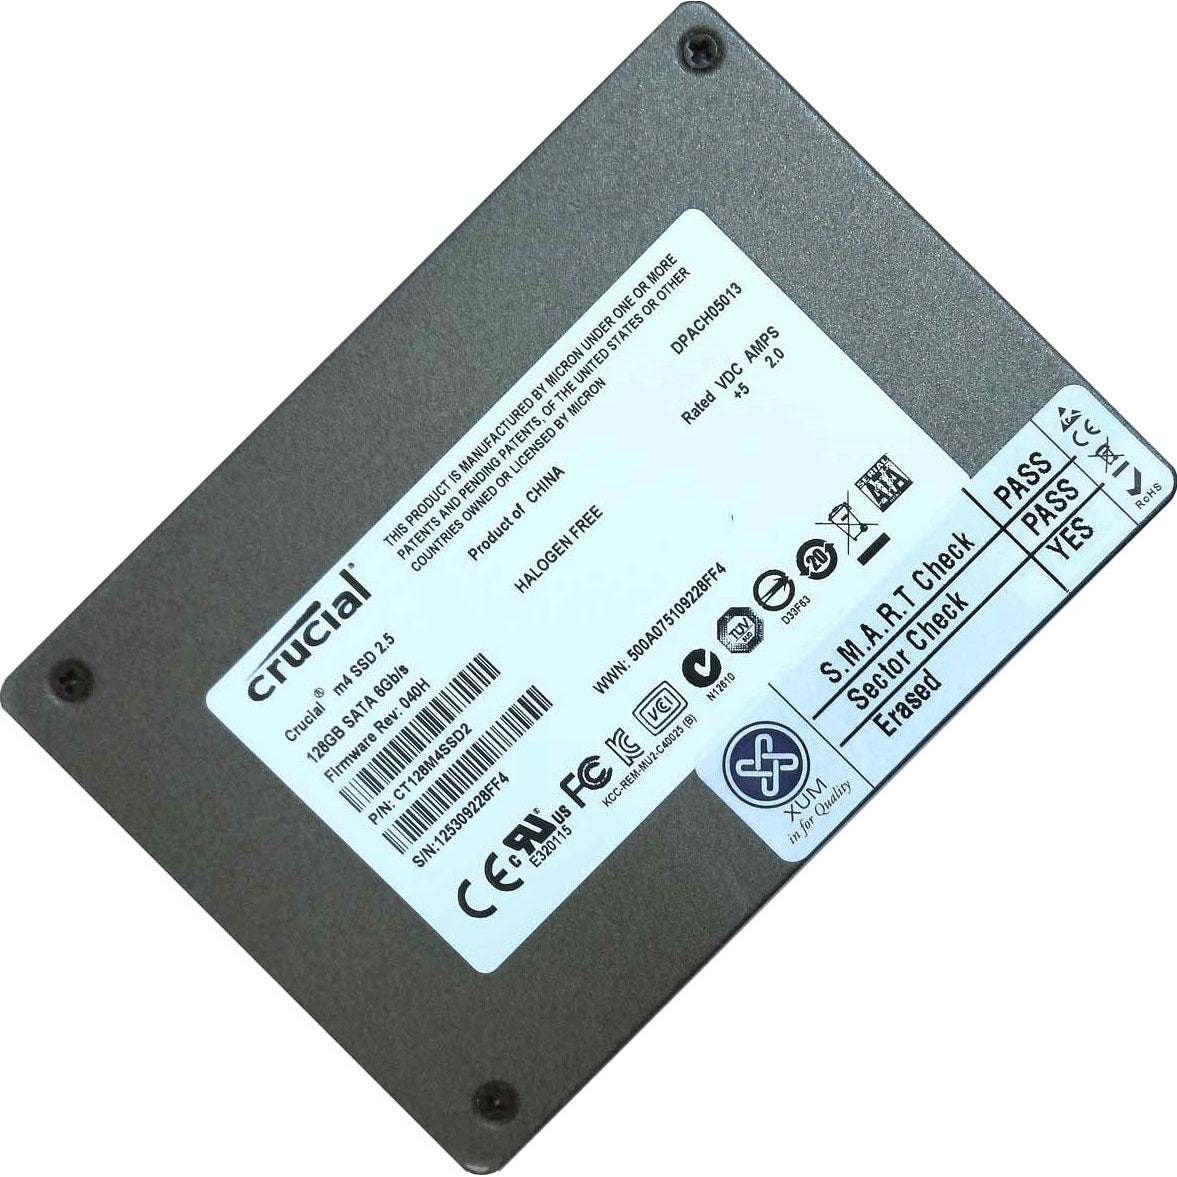 blæse hul renovere Uafhængig 128GB SSD 2.5" SATA III Solid State Drive | Hard Disk for Laptops, Des –  Asetos Computers